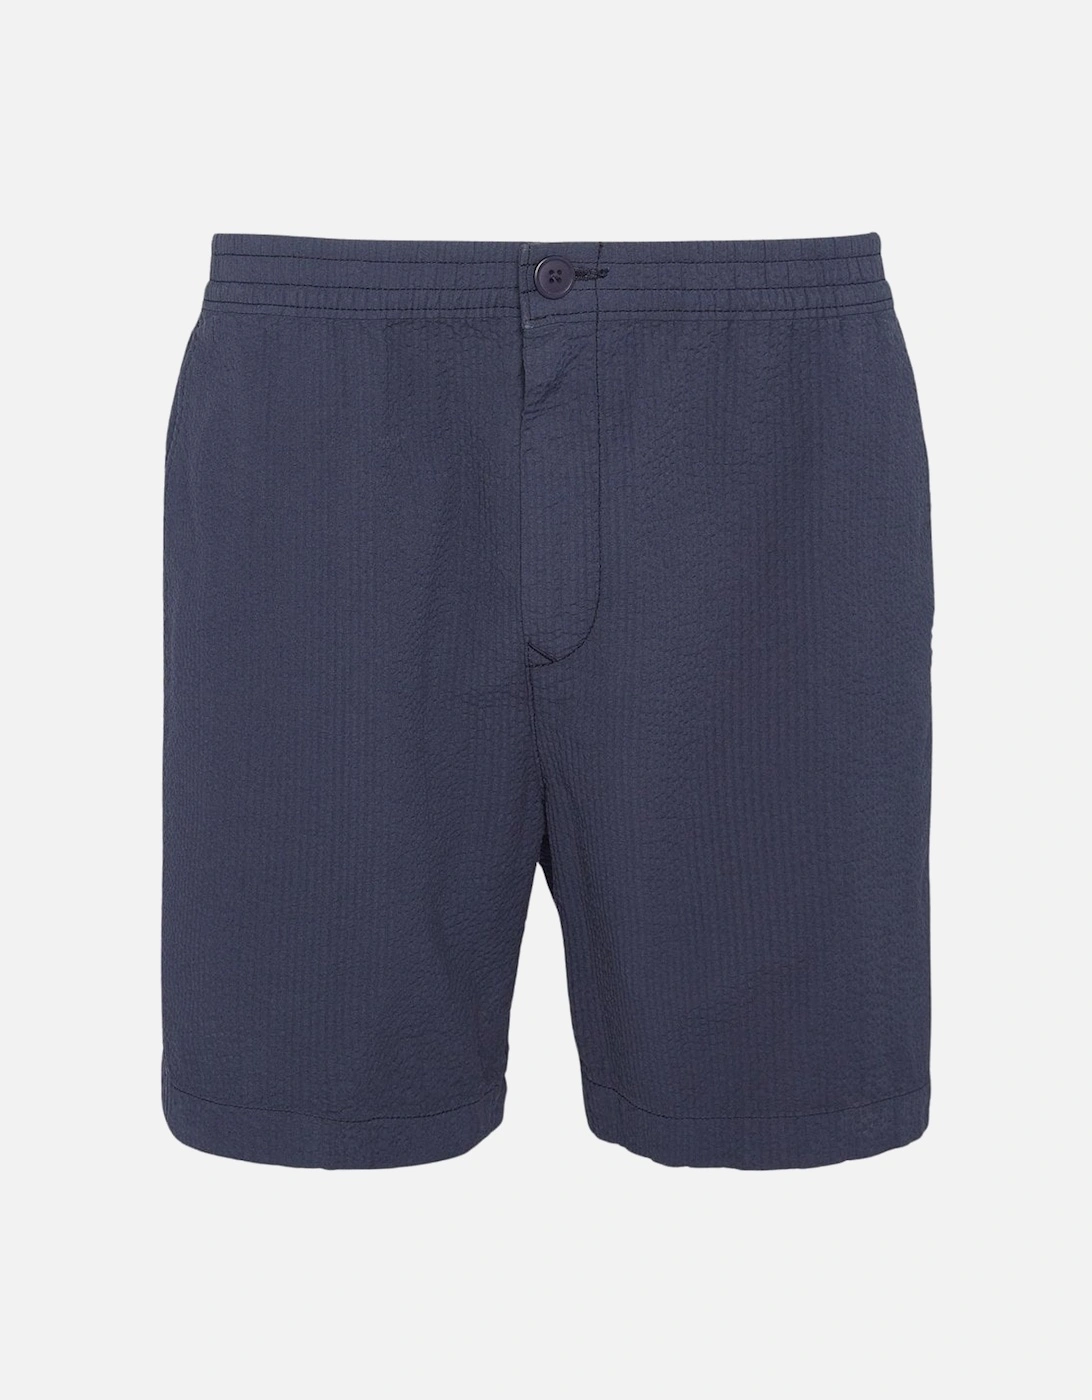 Melbury Shorts - Navy Blue, 8 of 7